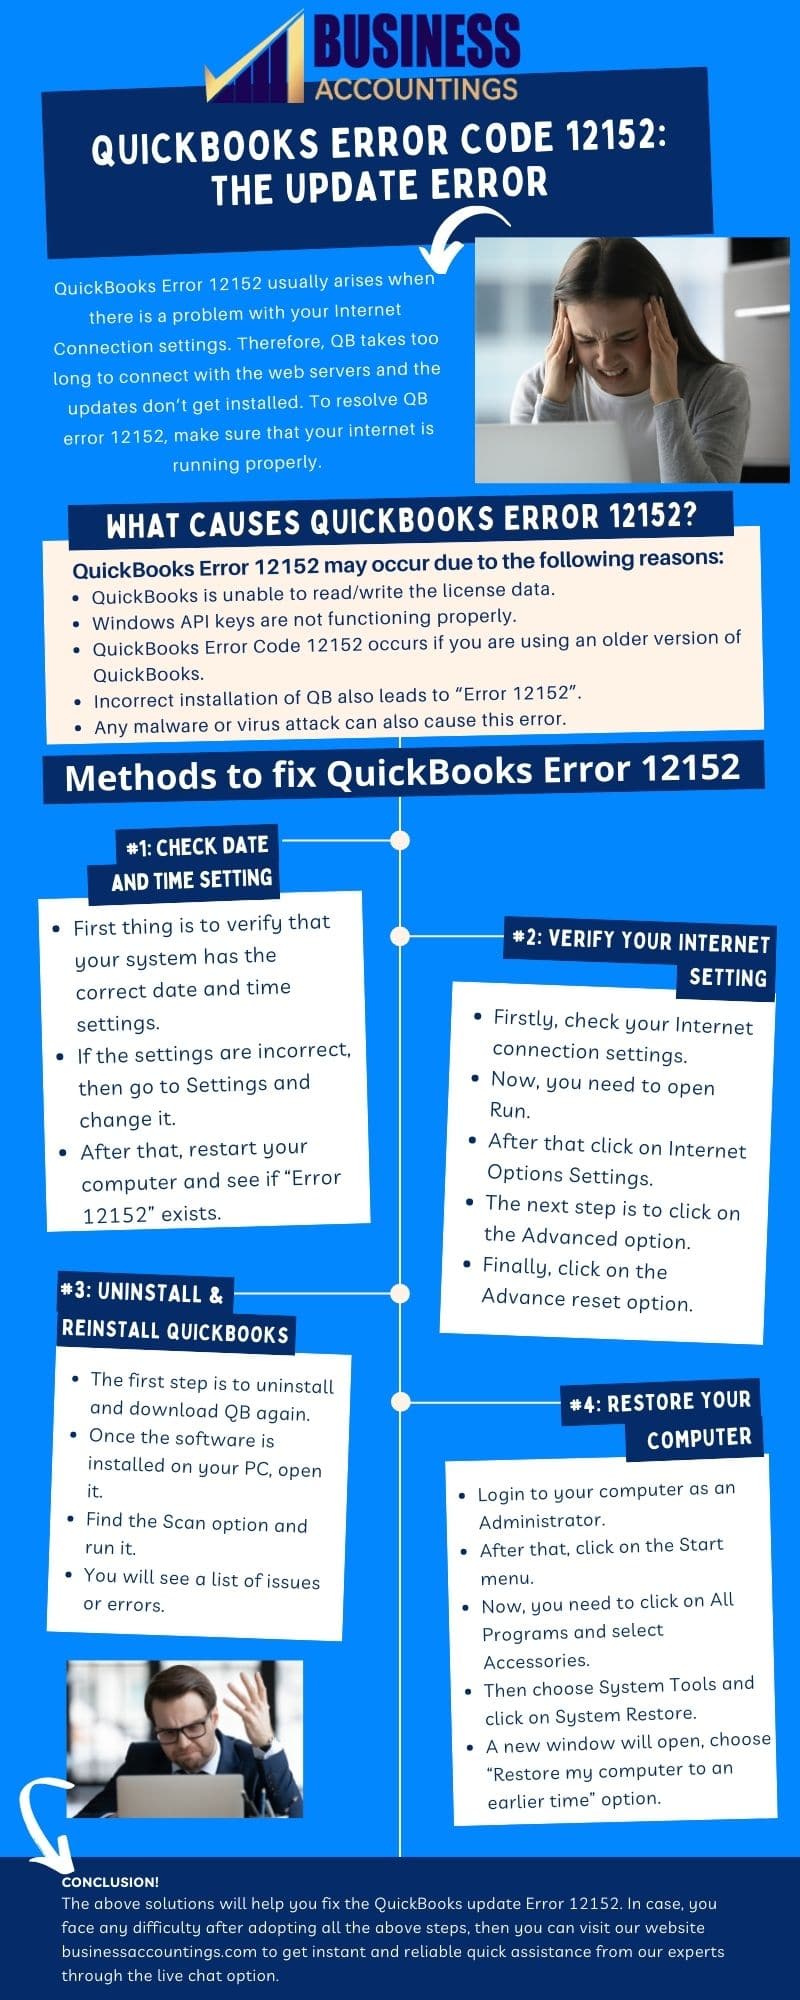 Infographic to Fix the QuickBooks Error Code 12152